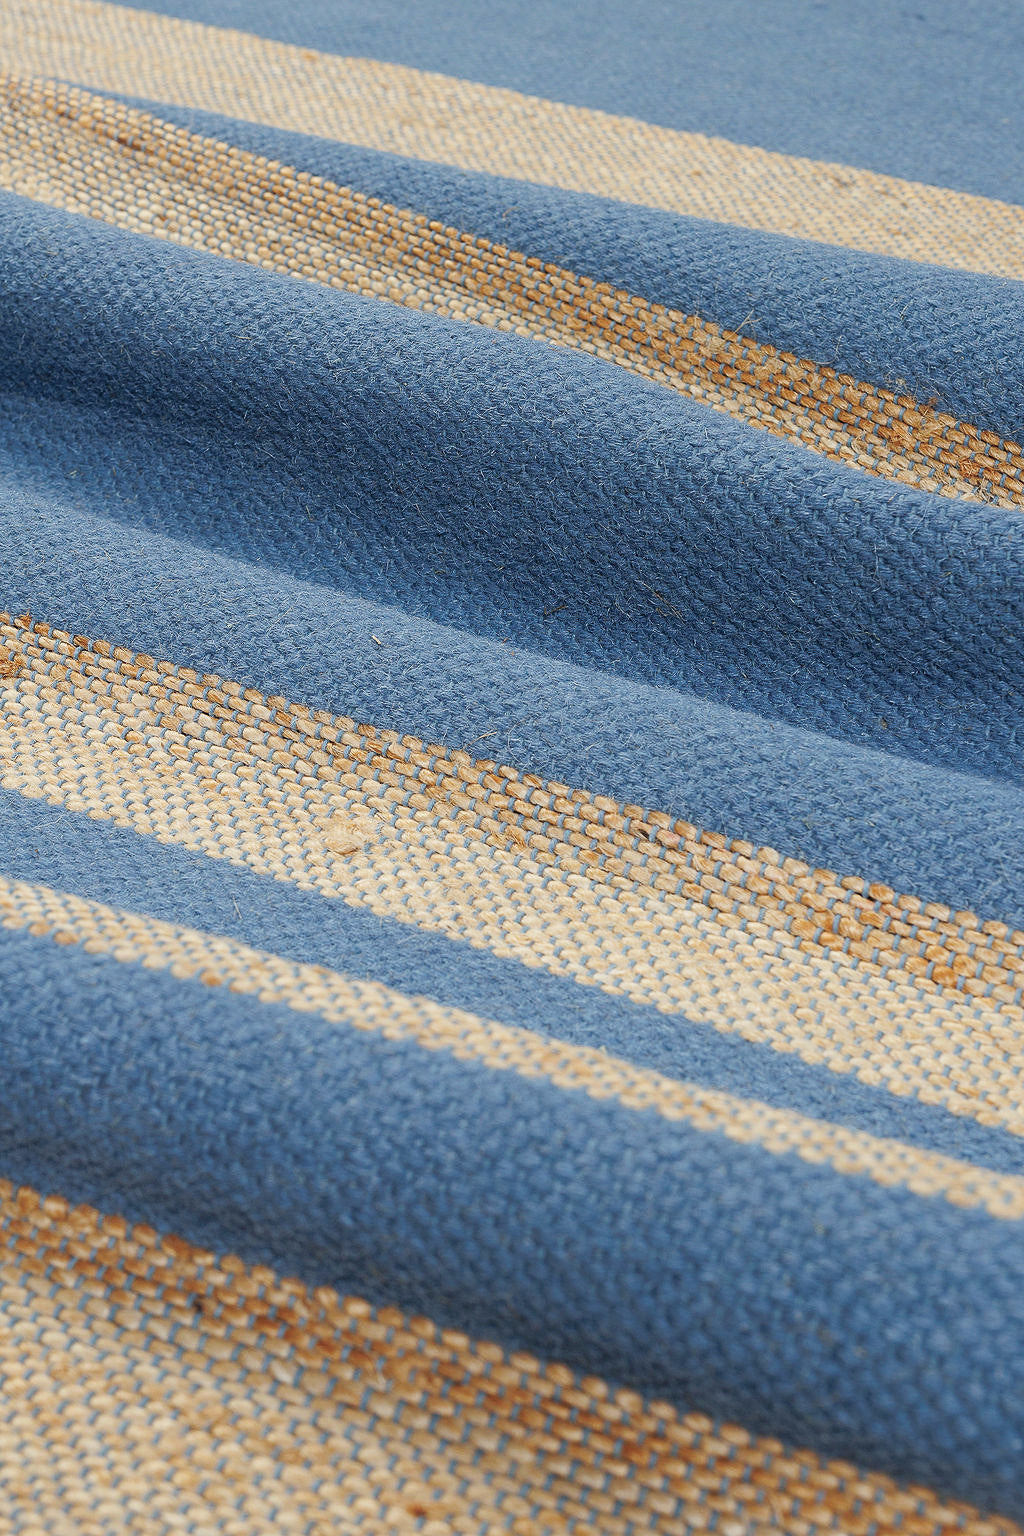 jute runner rug with blue stripes